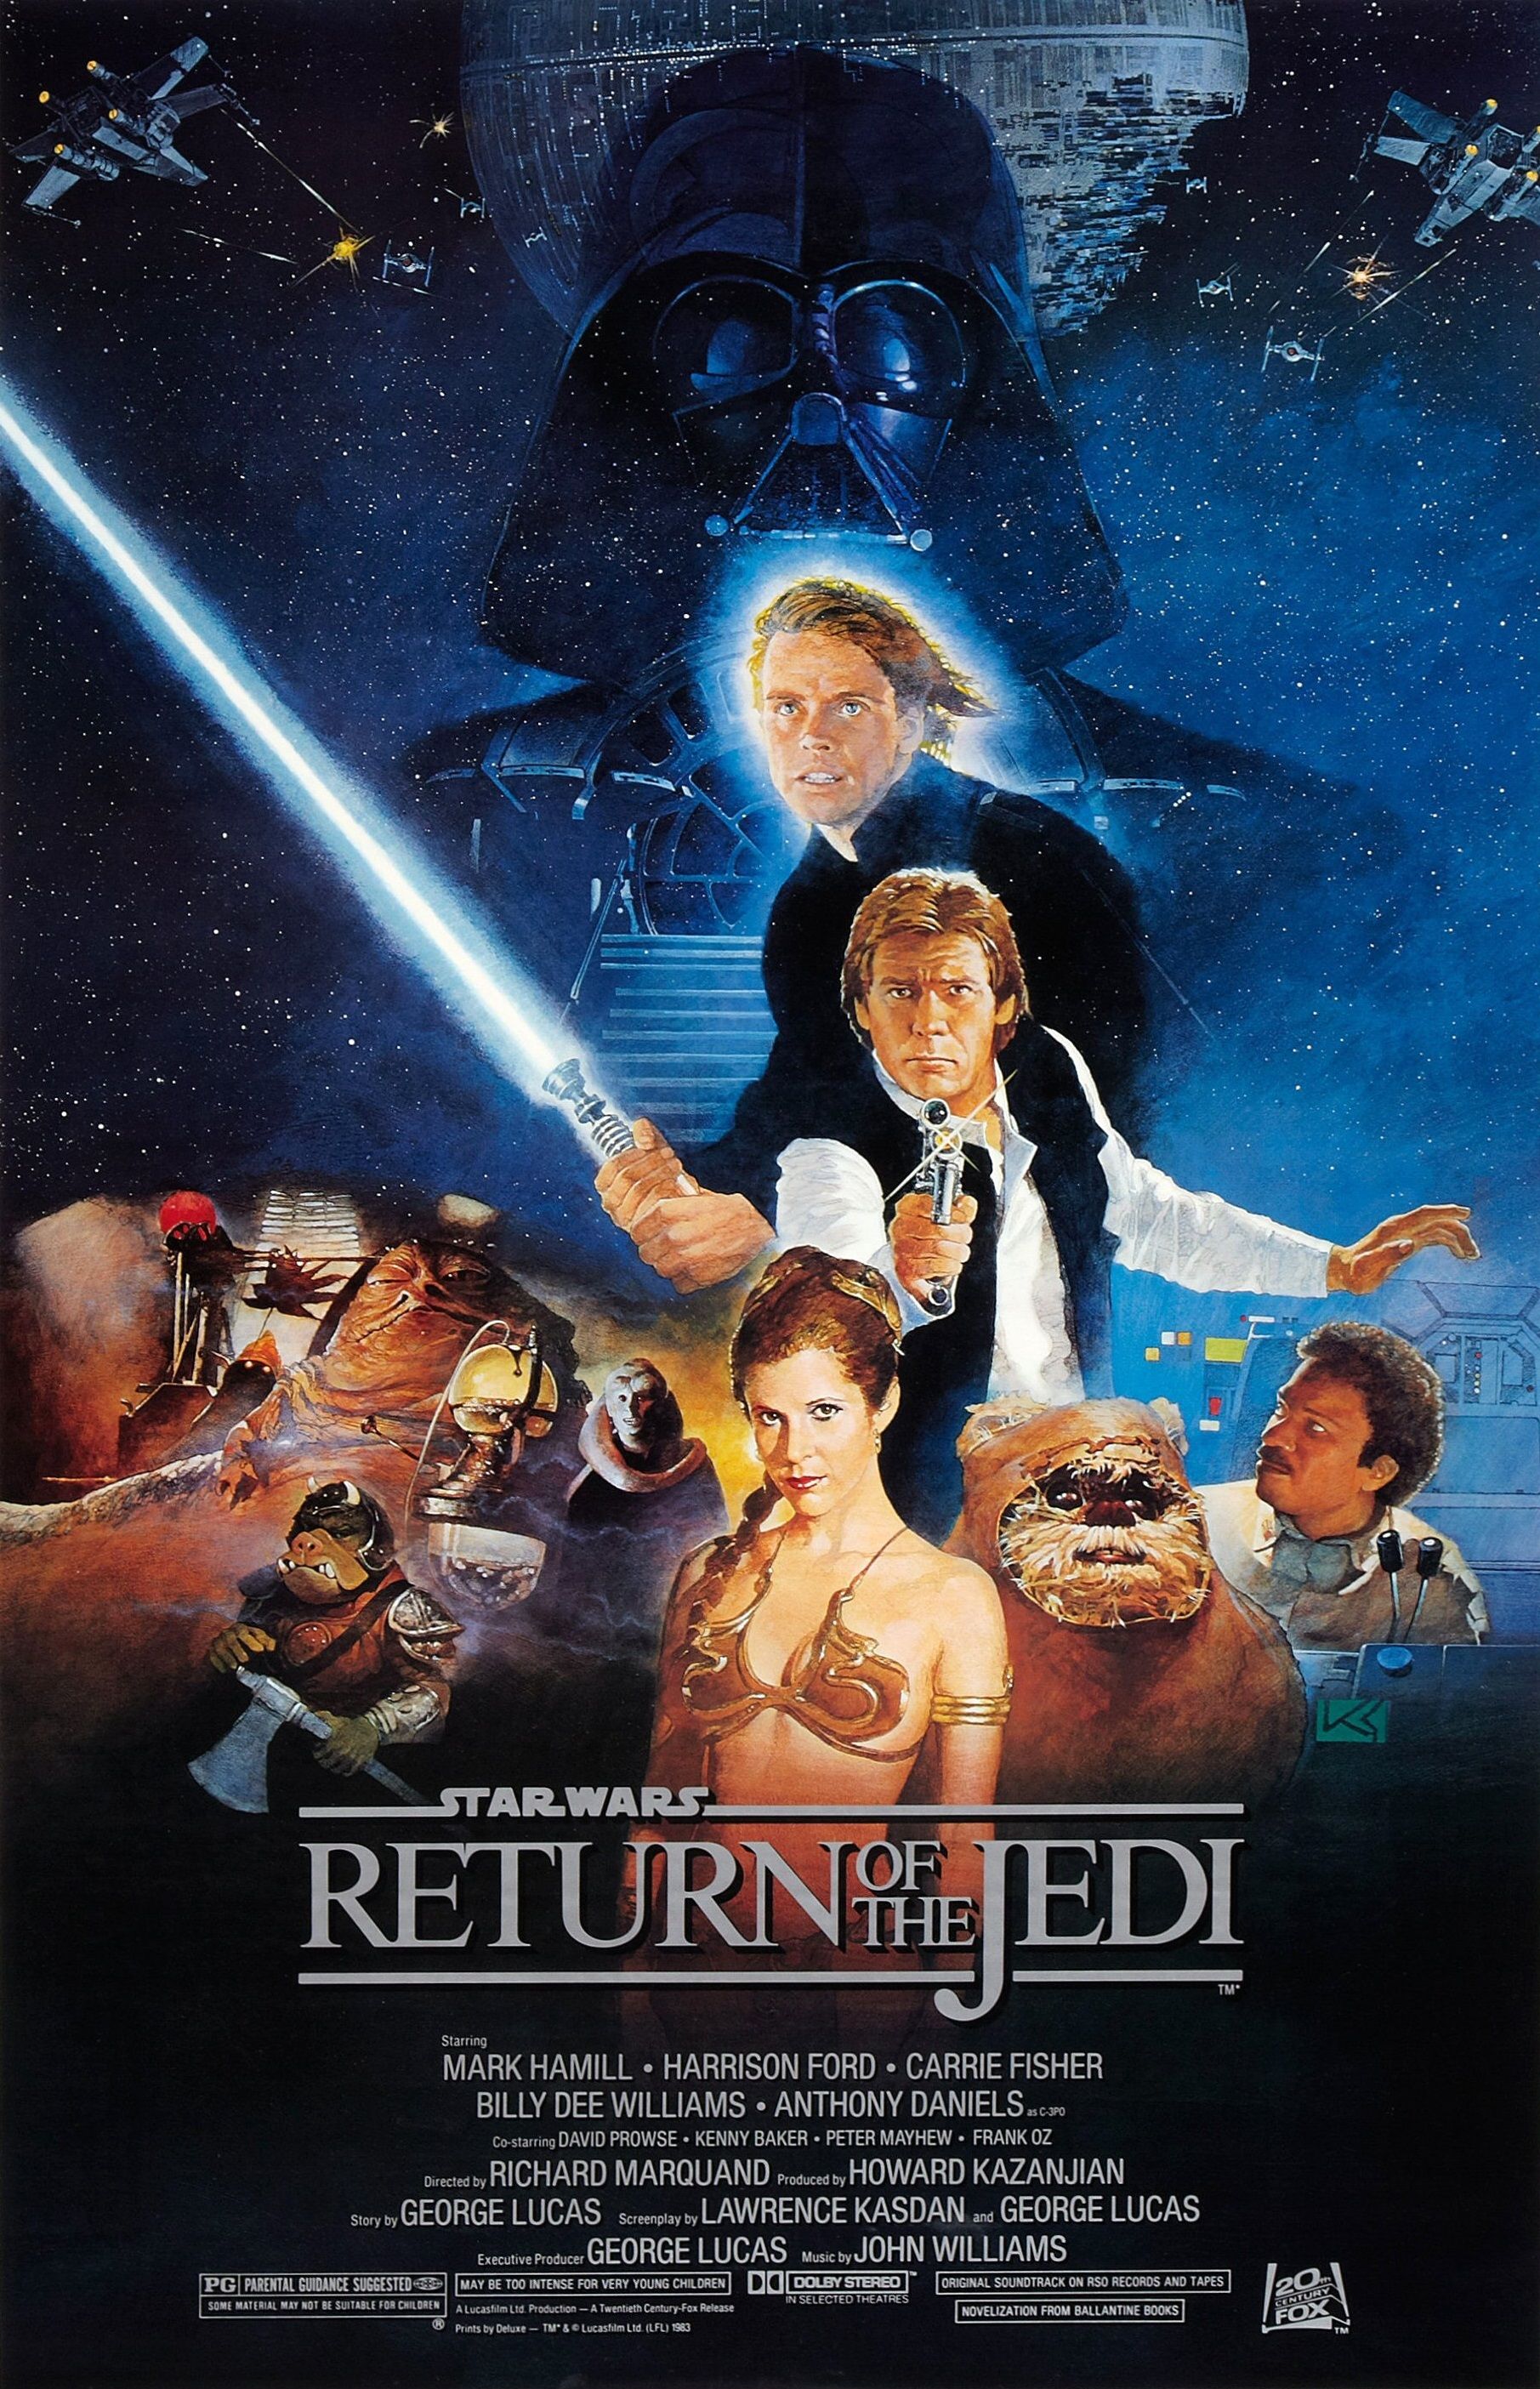 Star Wars Episode VI - Return of the Jedi Film Poster